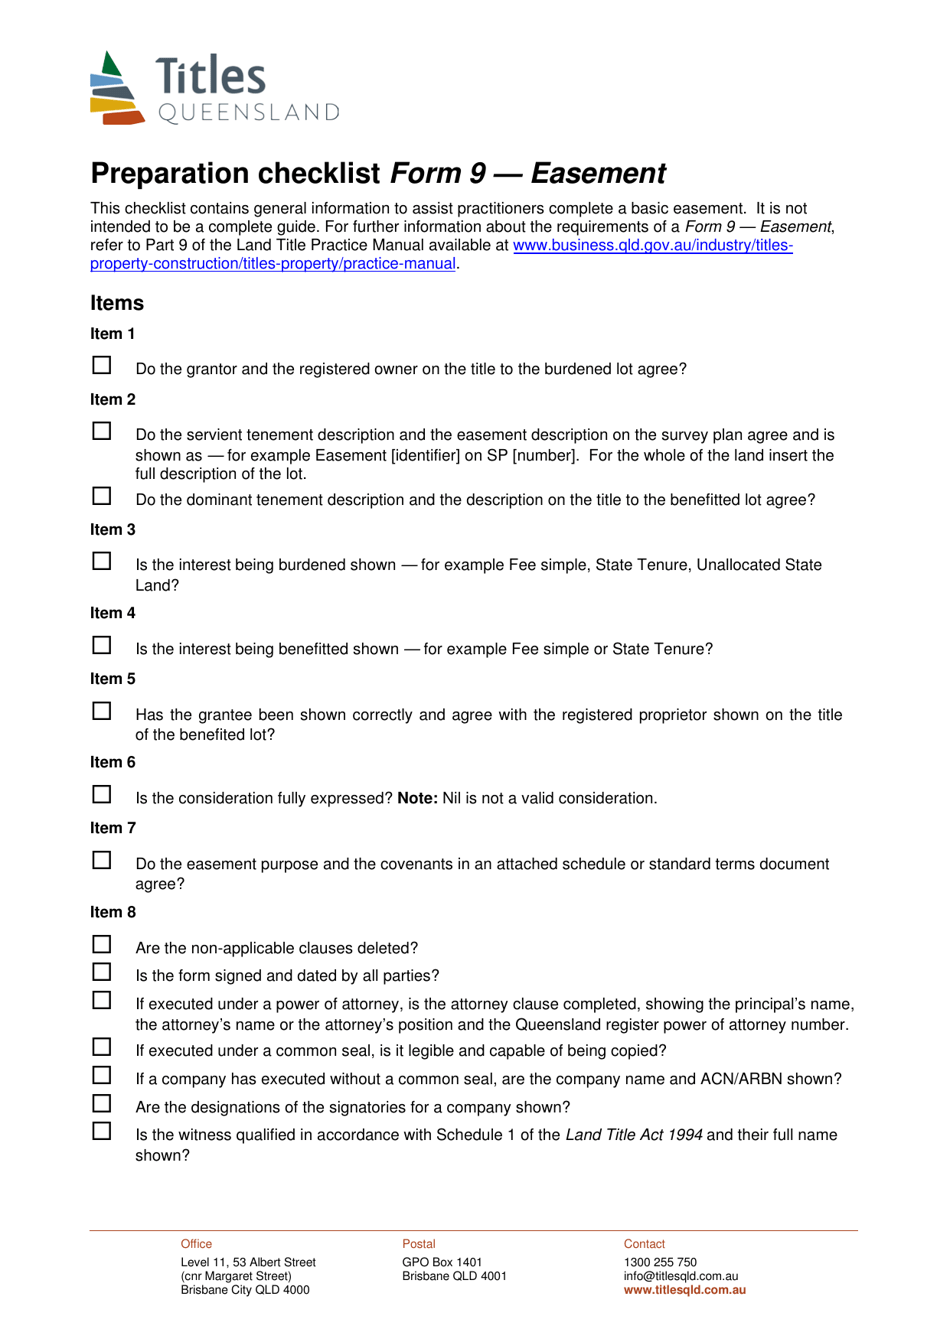 Form 9 Preparation Checklist - Easement - Queensland, Australia, Page 1